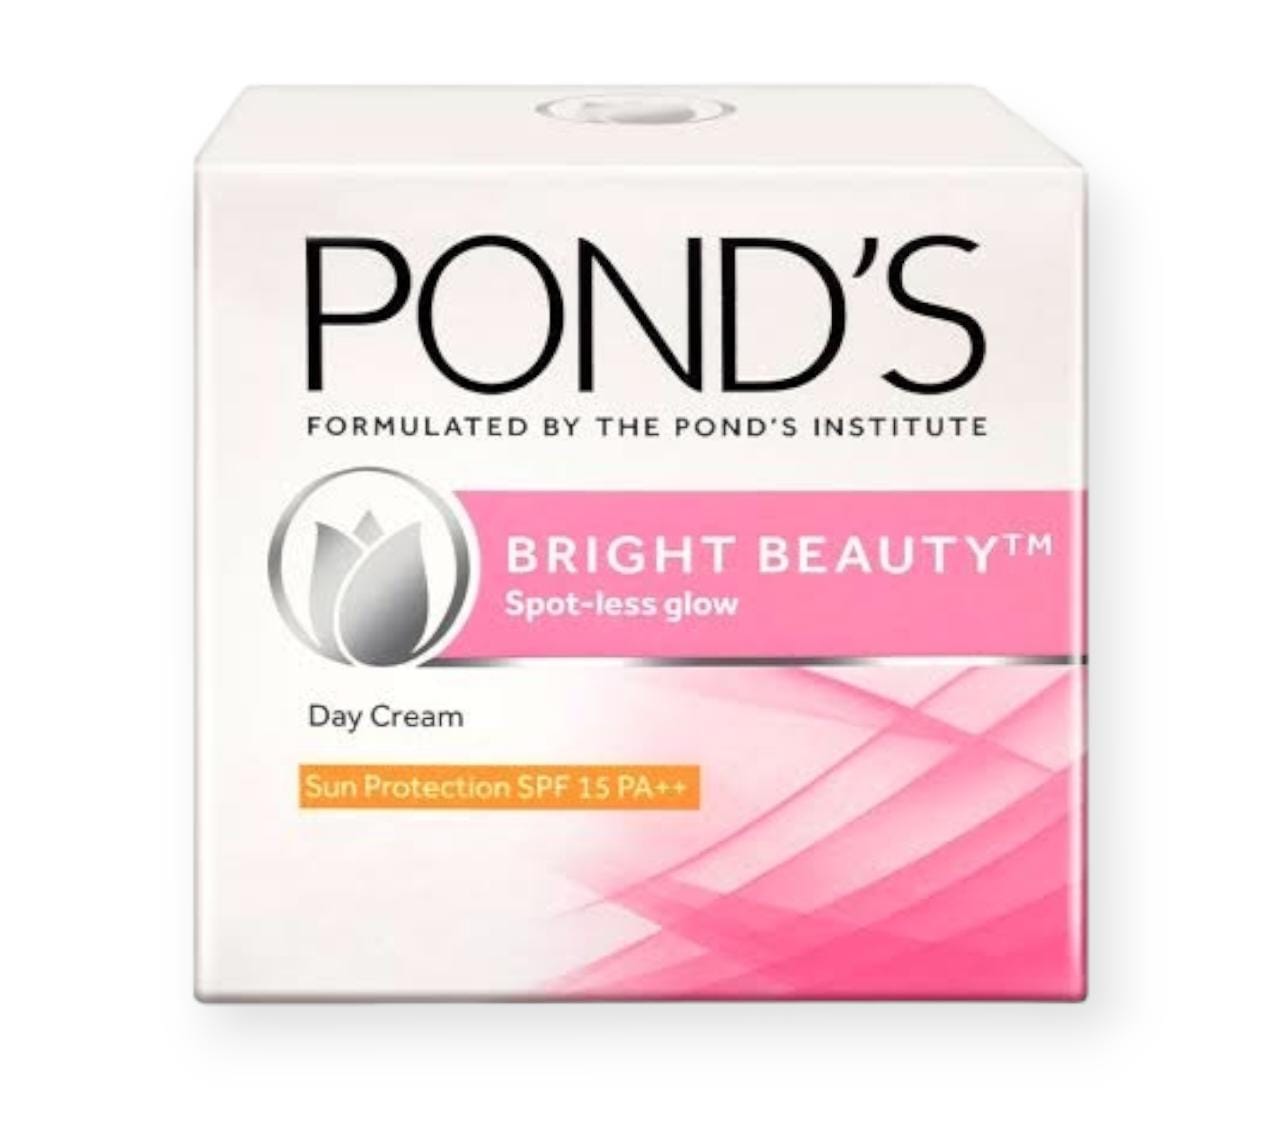 POND'S Bright Beauty Cream